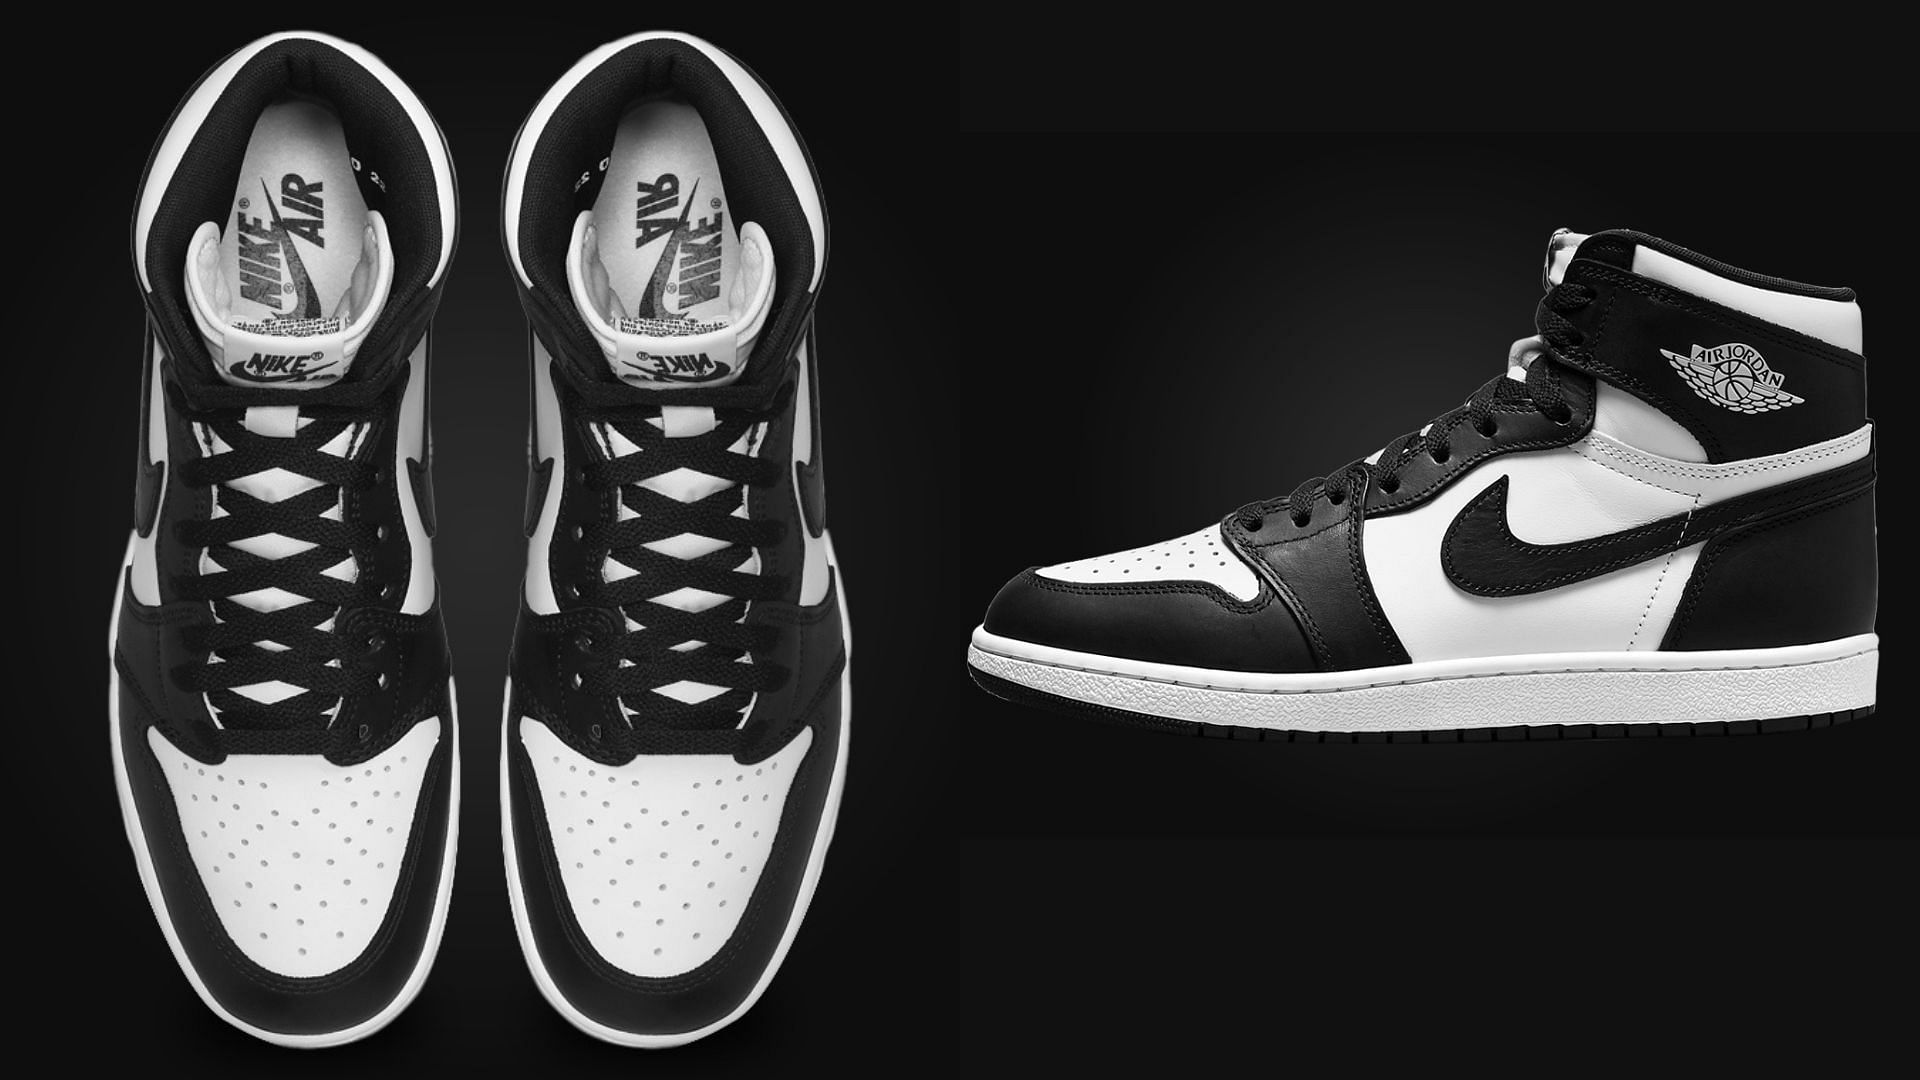 Where to buy Air Jordan 1 High 85 “Panda” shoes? Price and more ...